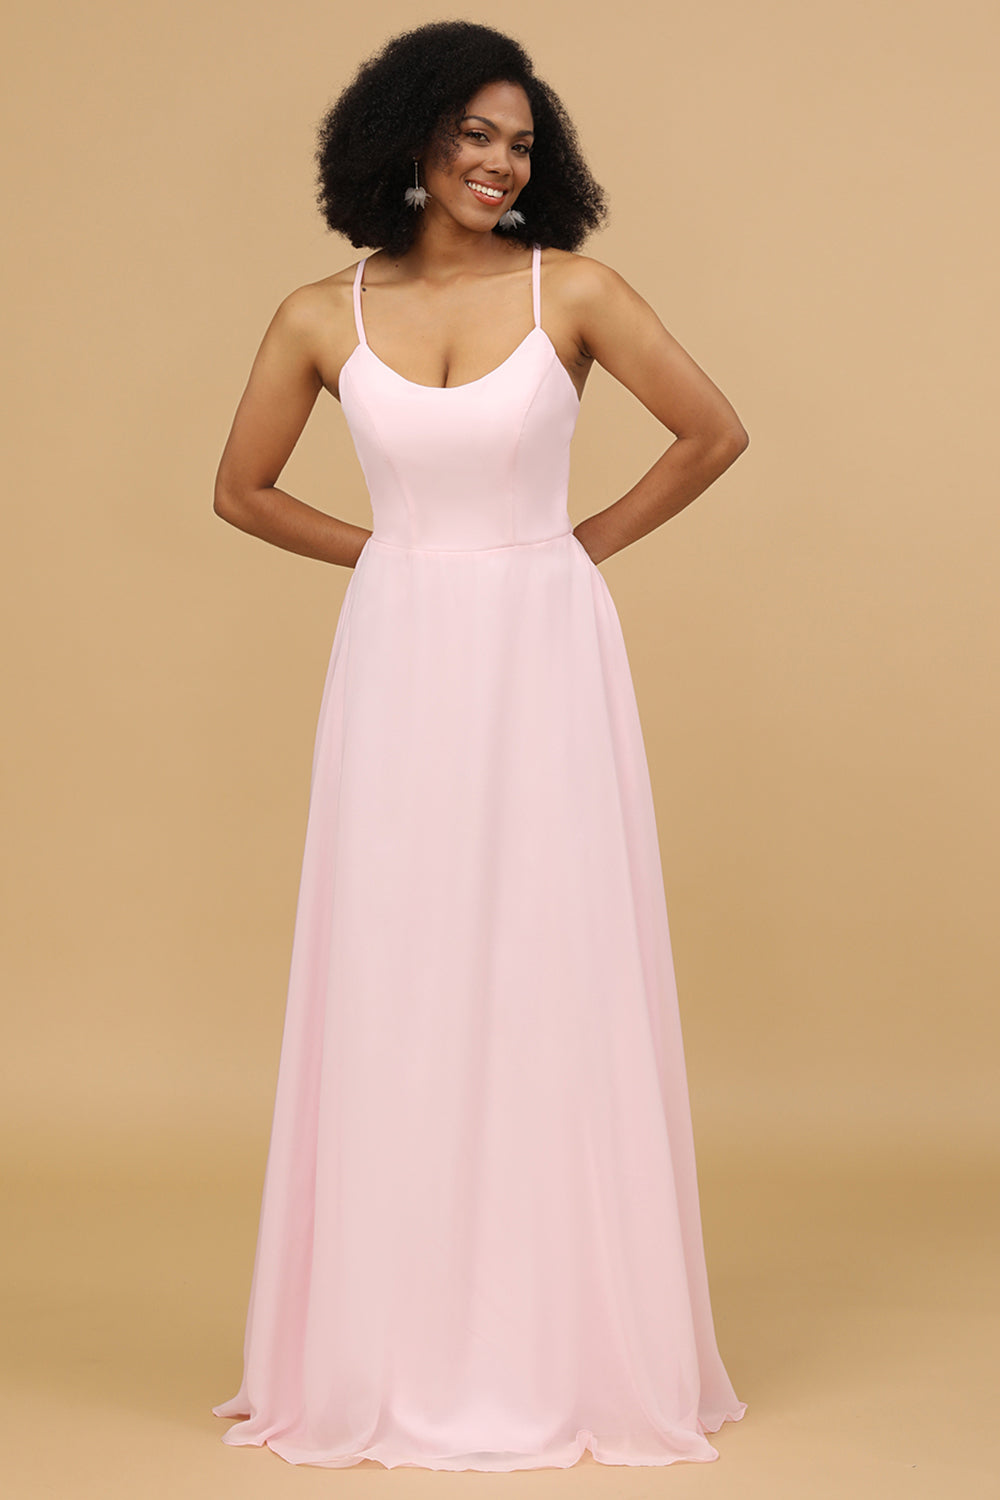 Pink Sheath/Column Spaghetti Straps Long Chiffon Bridesmaid Dress